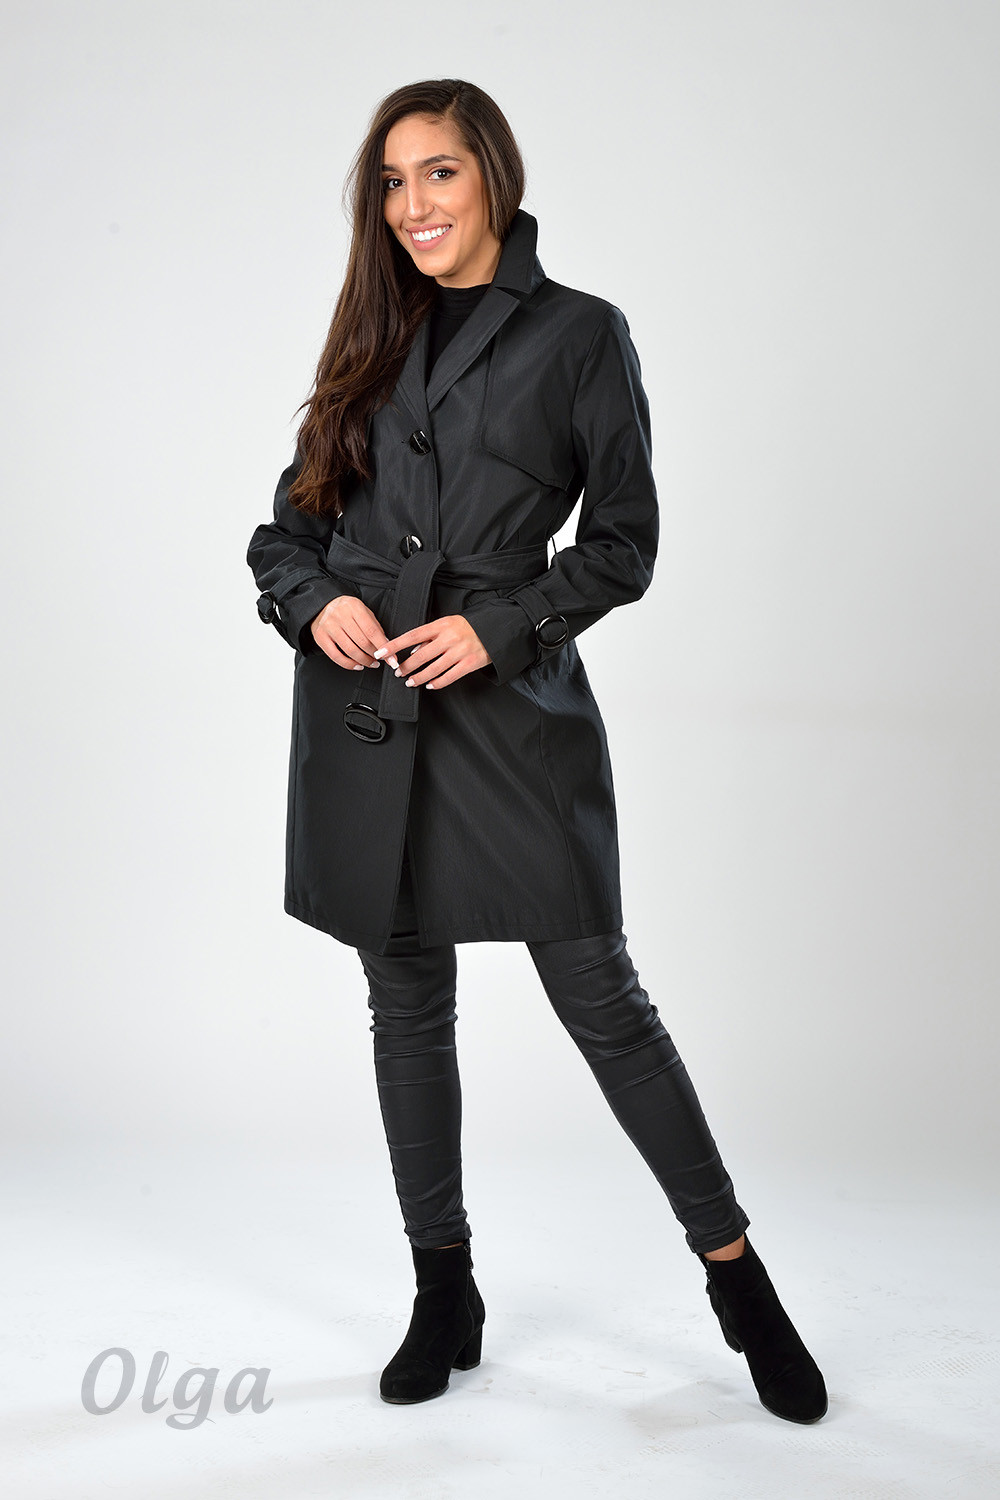 Dámský kabát Olga PW4 - Gamstel černá XL